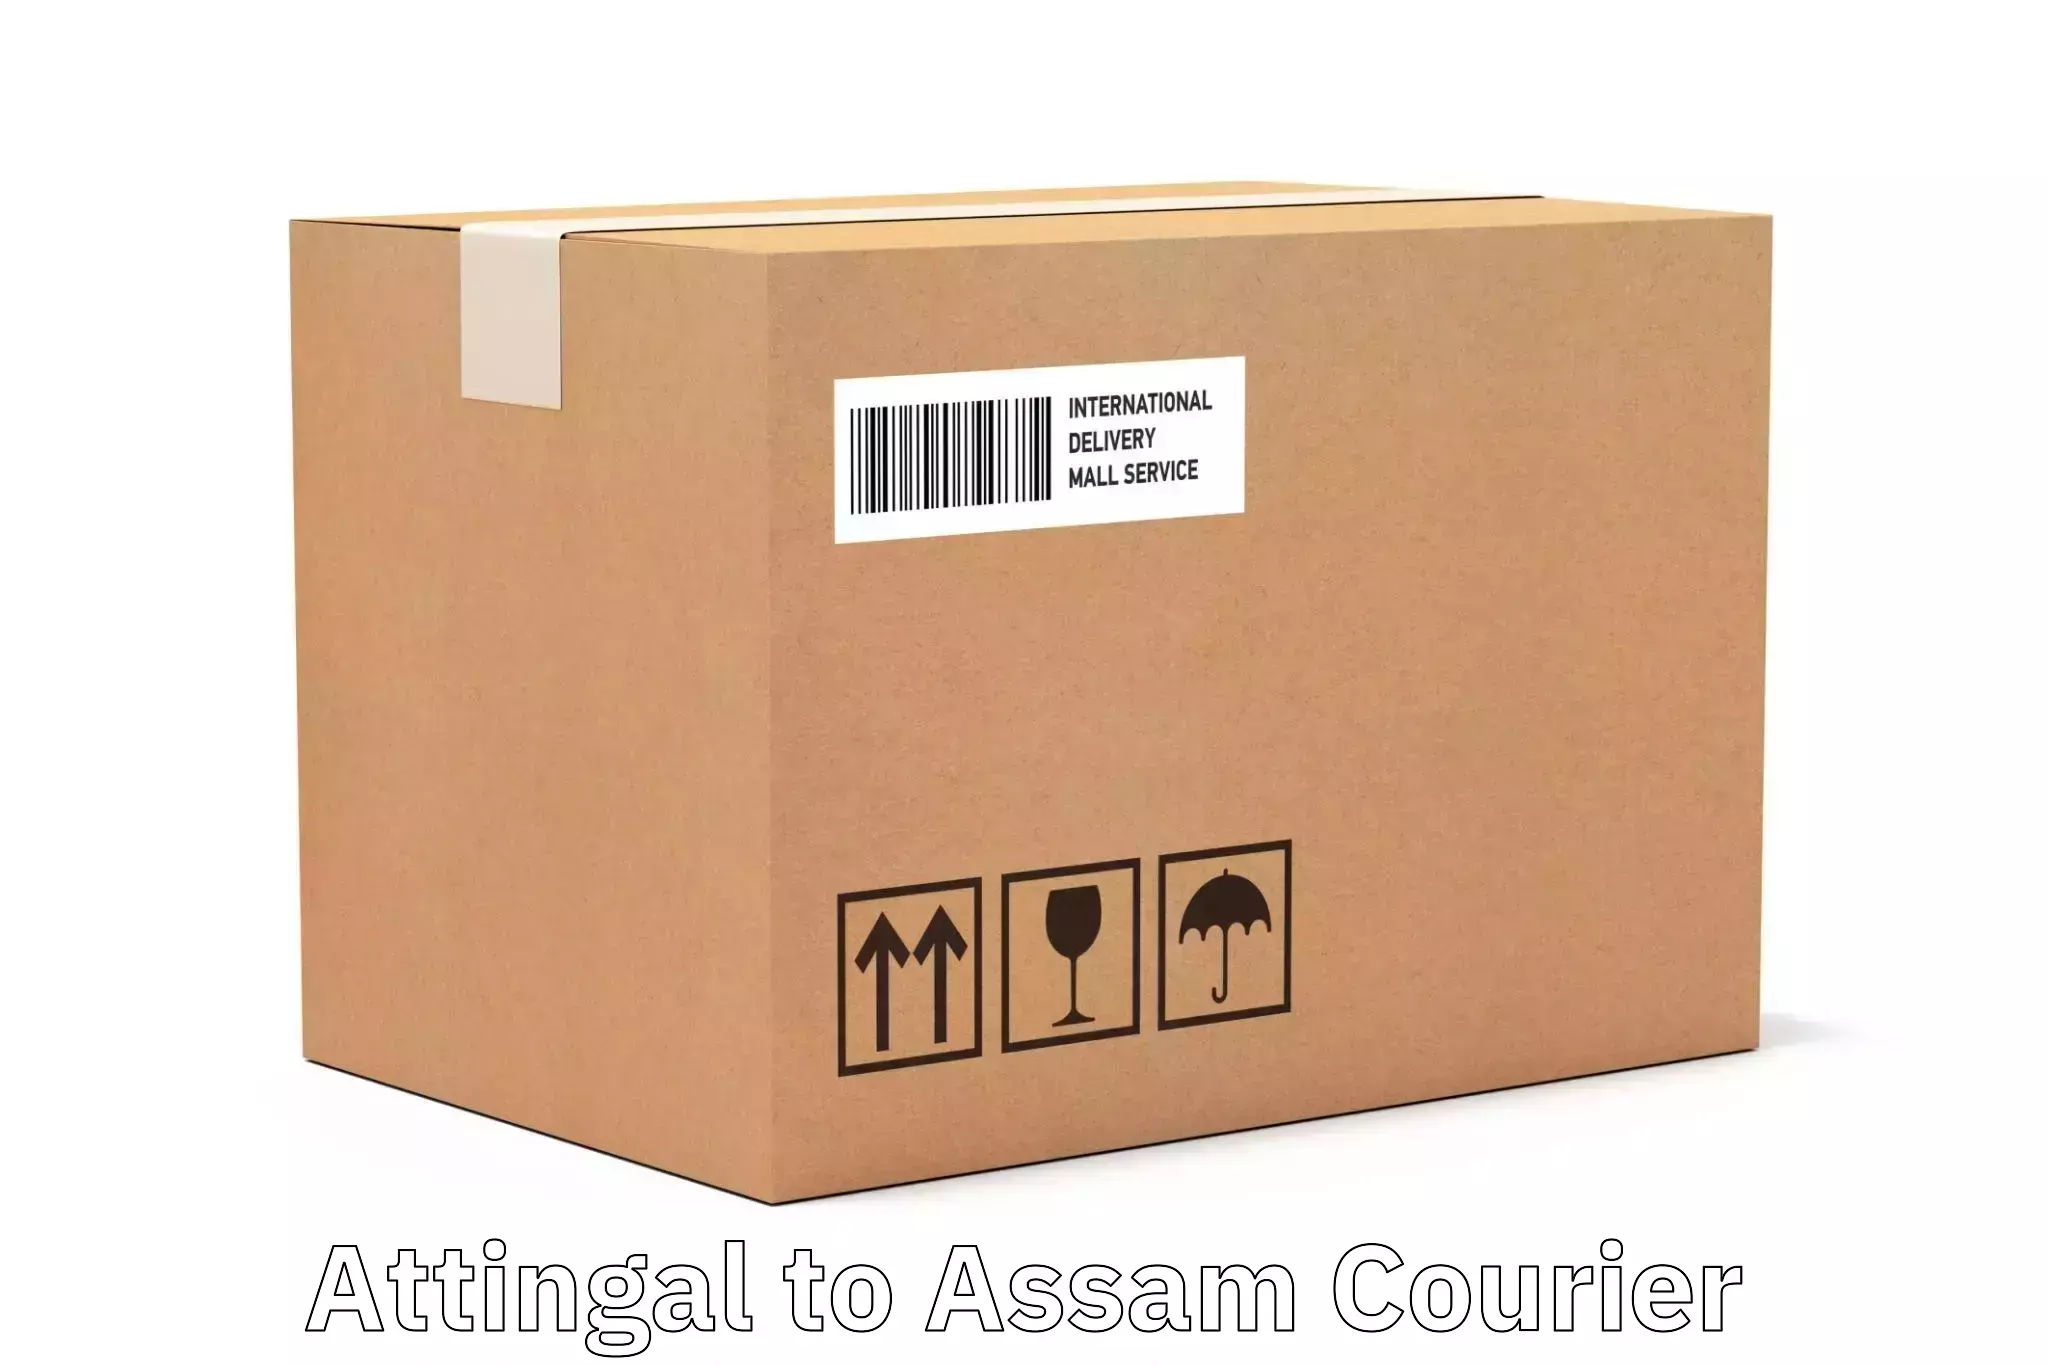 Global logistics network Attingal to Assam